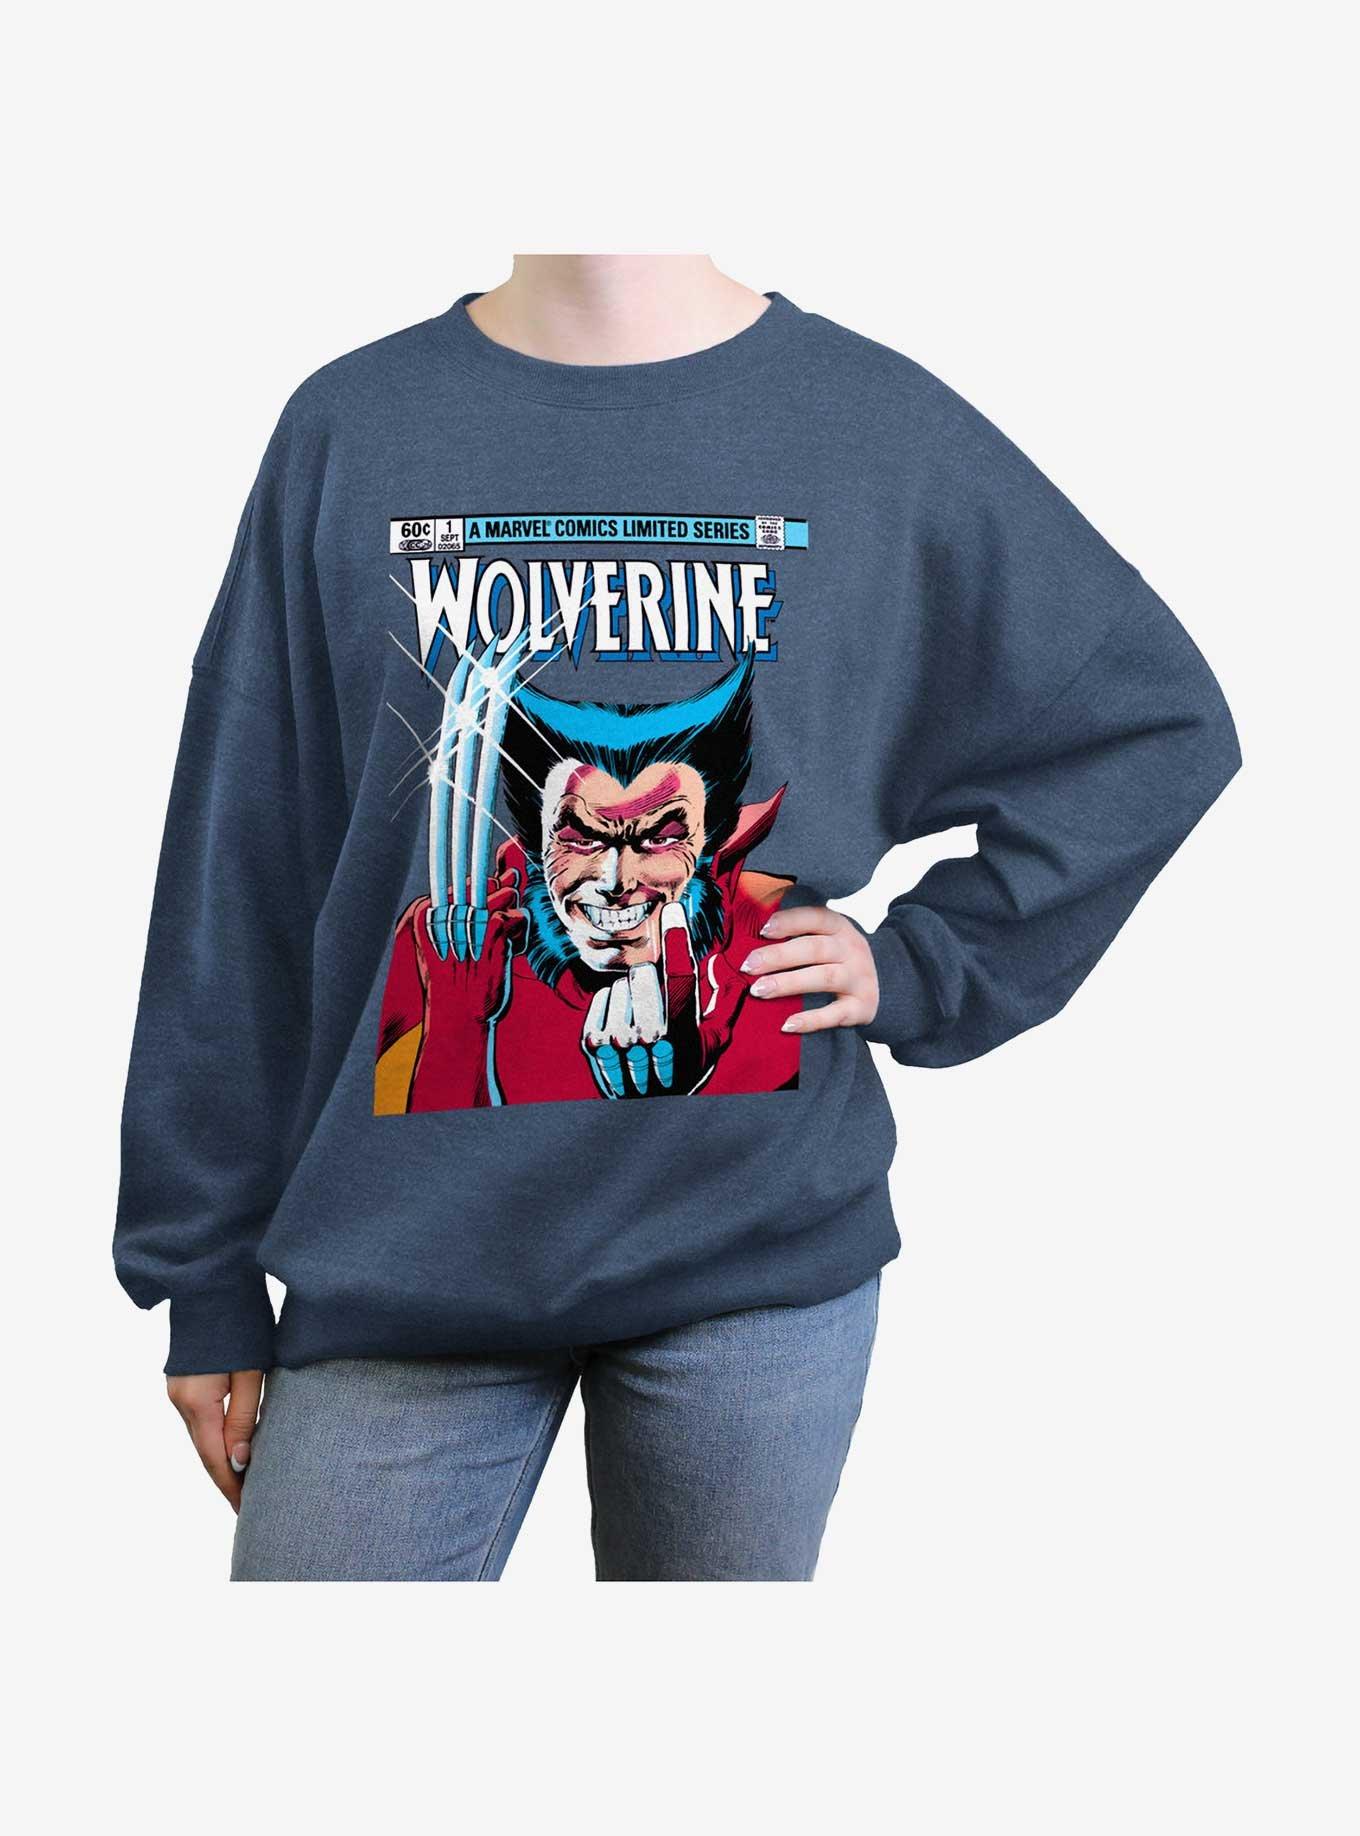 Wolverine 1st Issue Comic Cover Girls Oversized Sweatshirt, BLUEHTR, hi-res